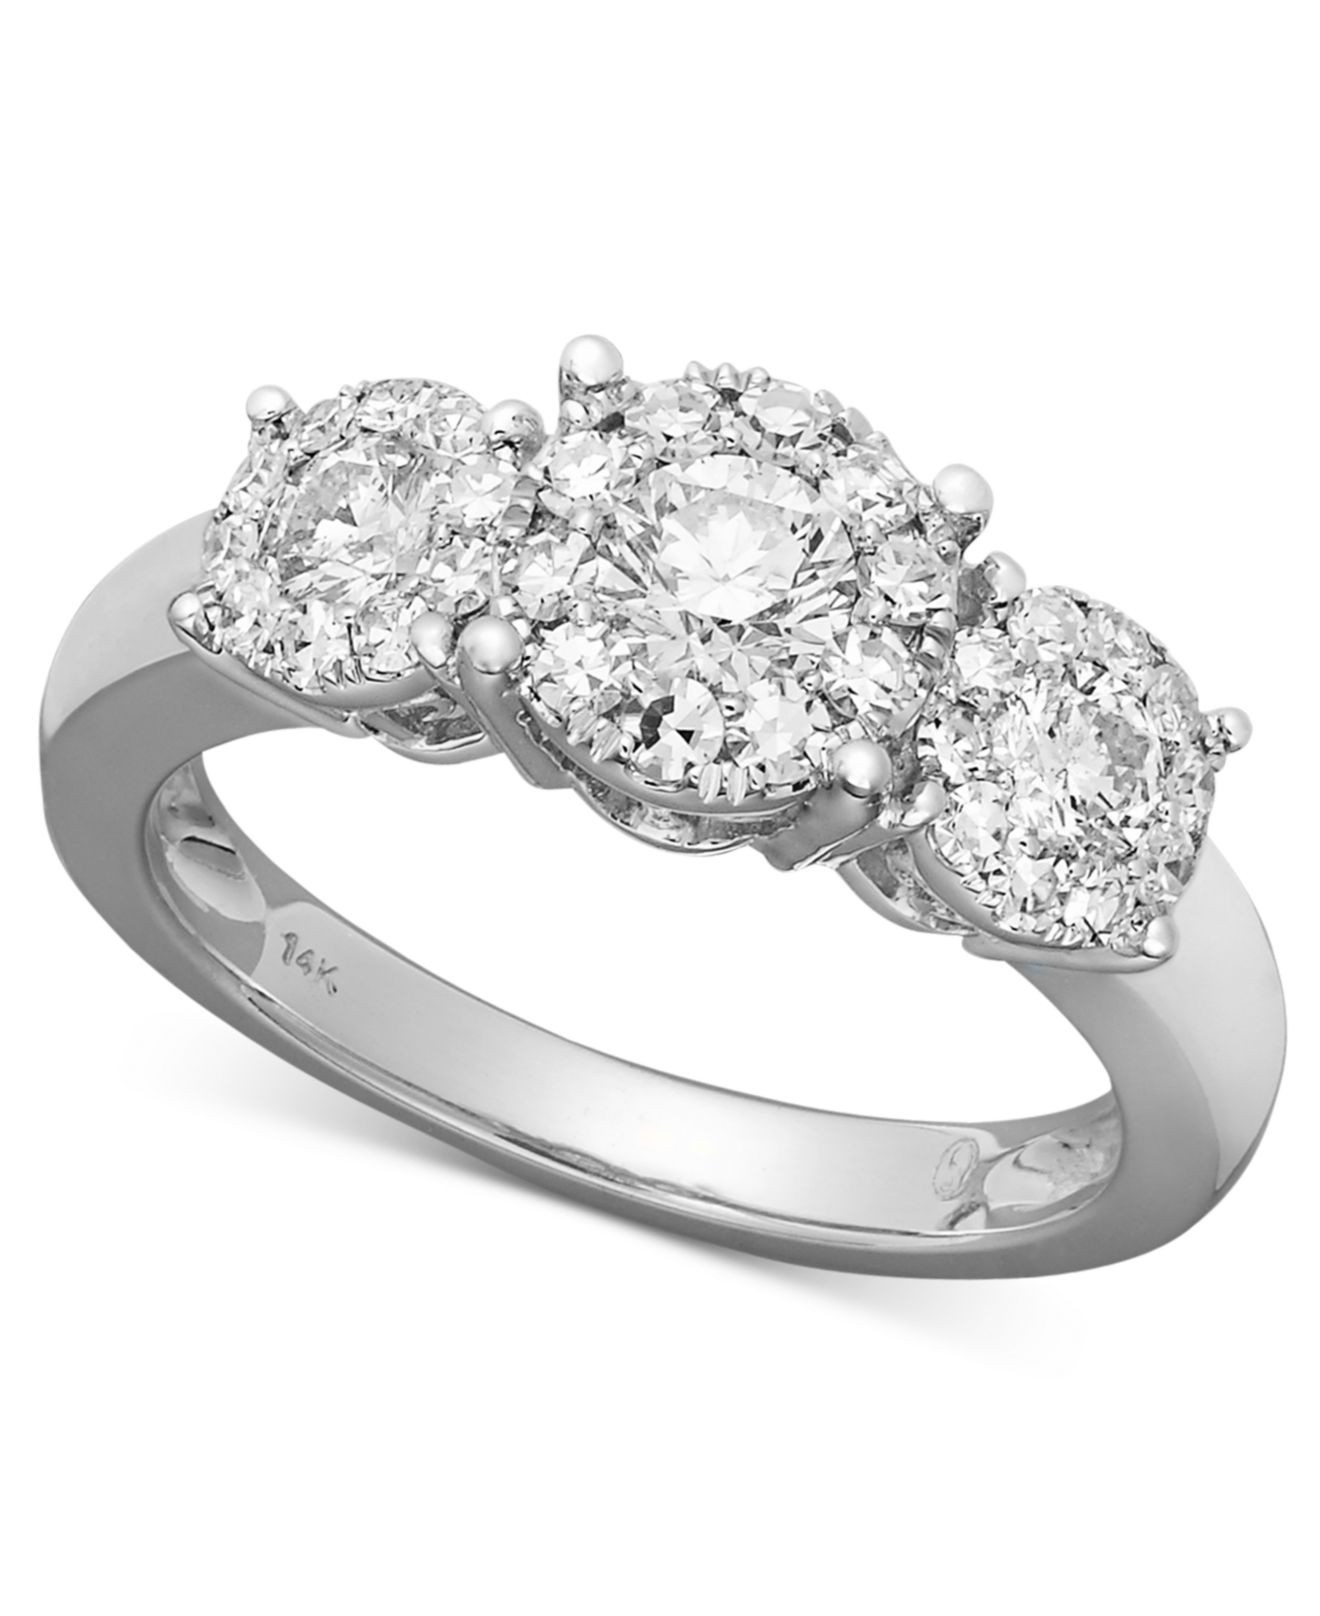 Macys Diamond Rings
 Macy s Diamond Engagement Ring In 14k White Gold 1 Ct T